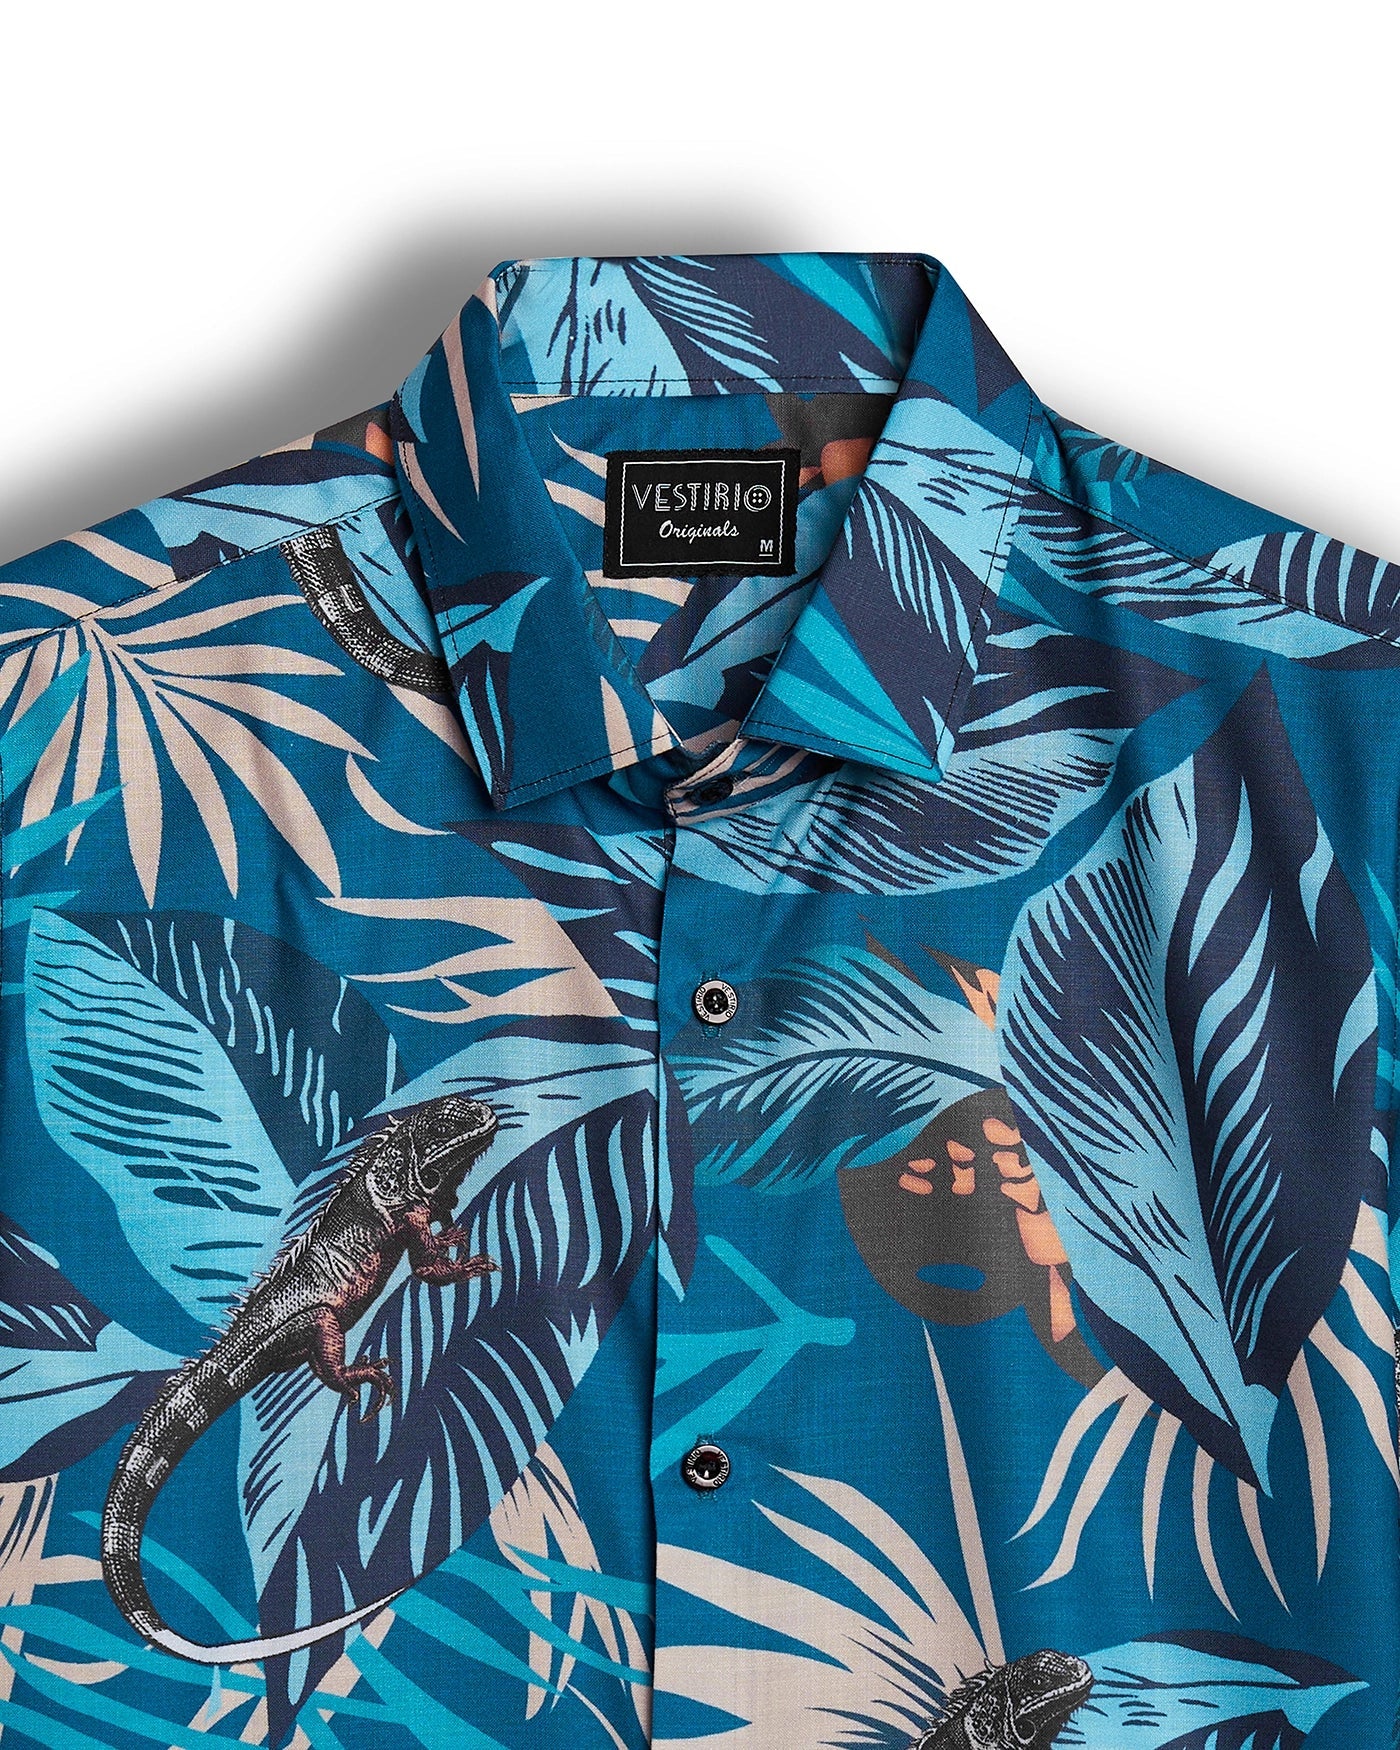 Jungle half sleeve printed shirt for men